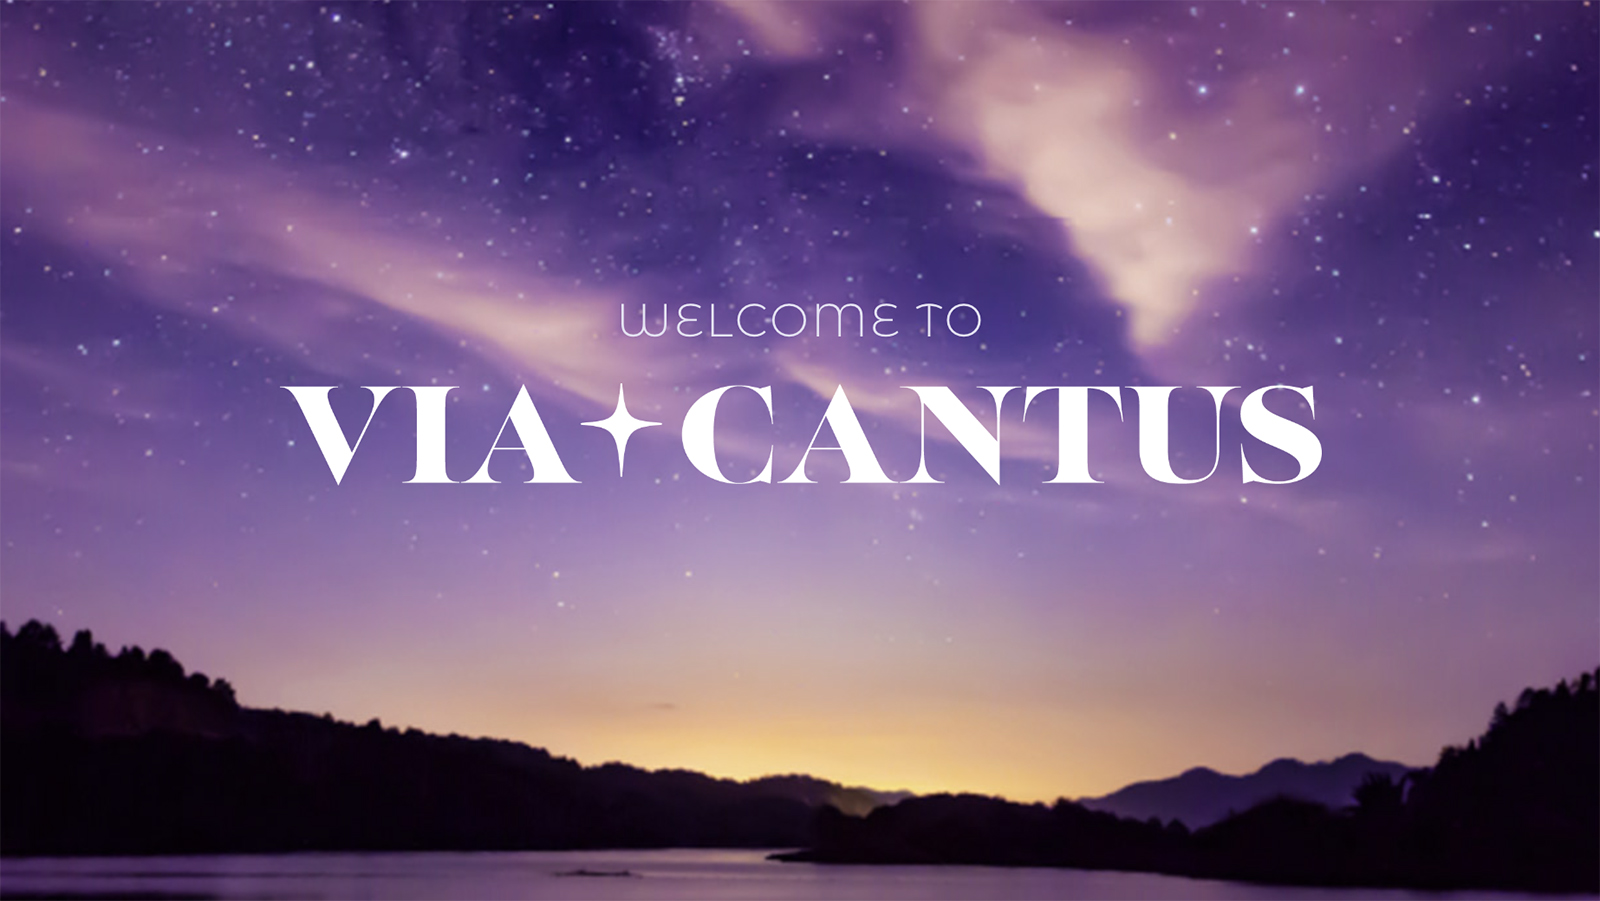 The Via Cantus website. (Screen grab)